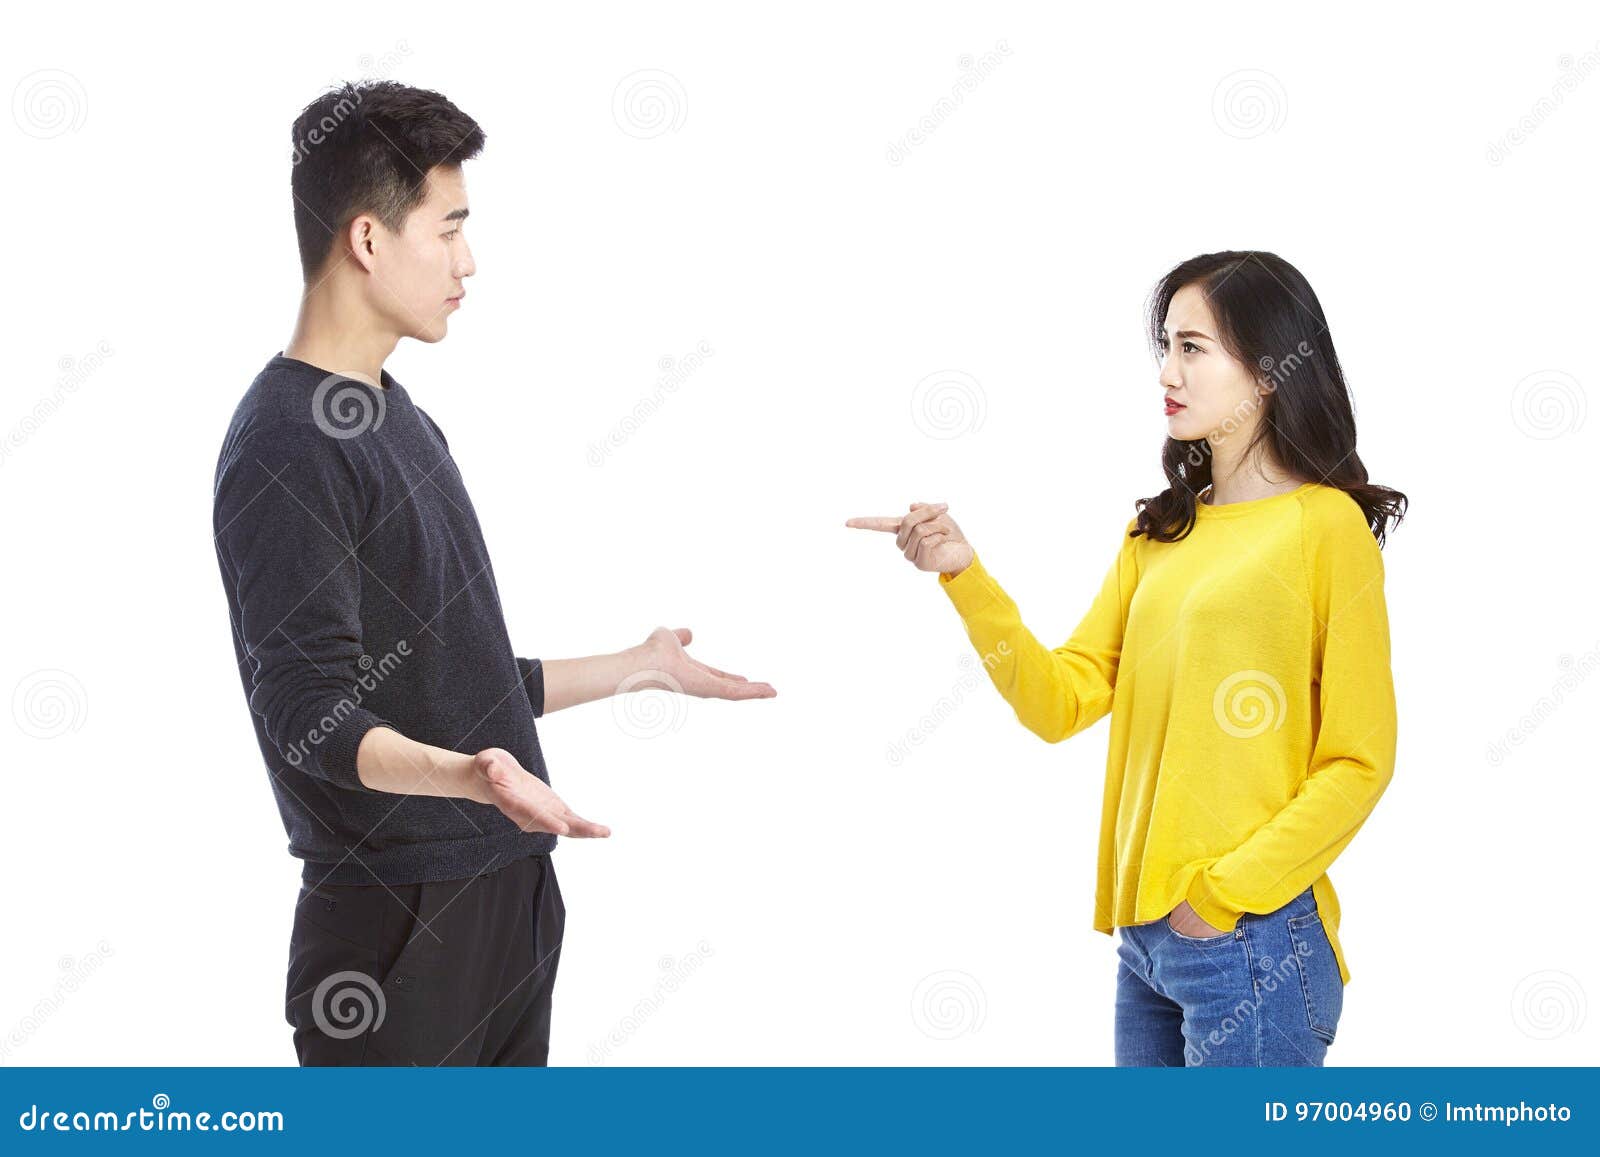 young asian couple quarreling